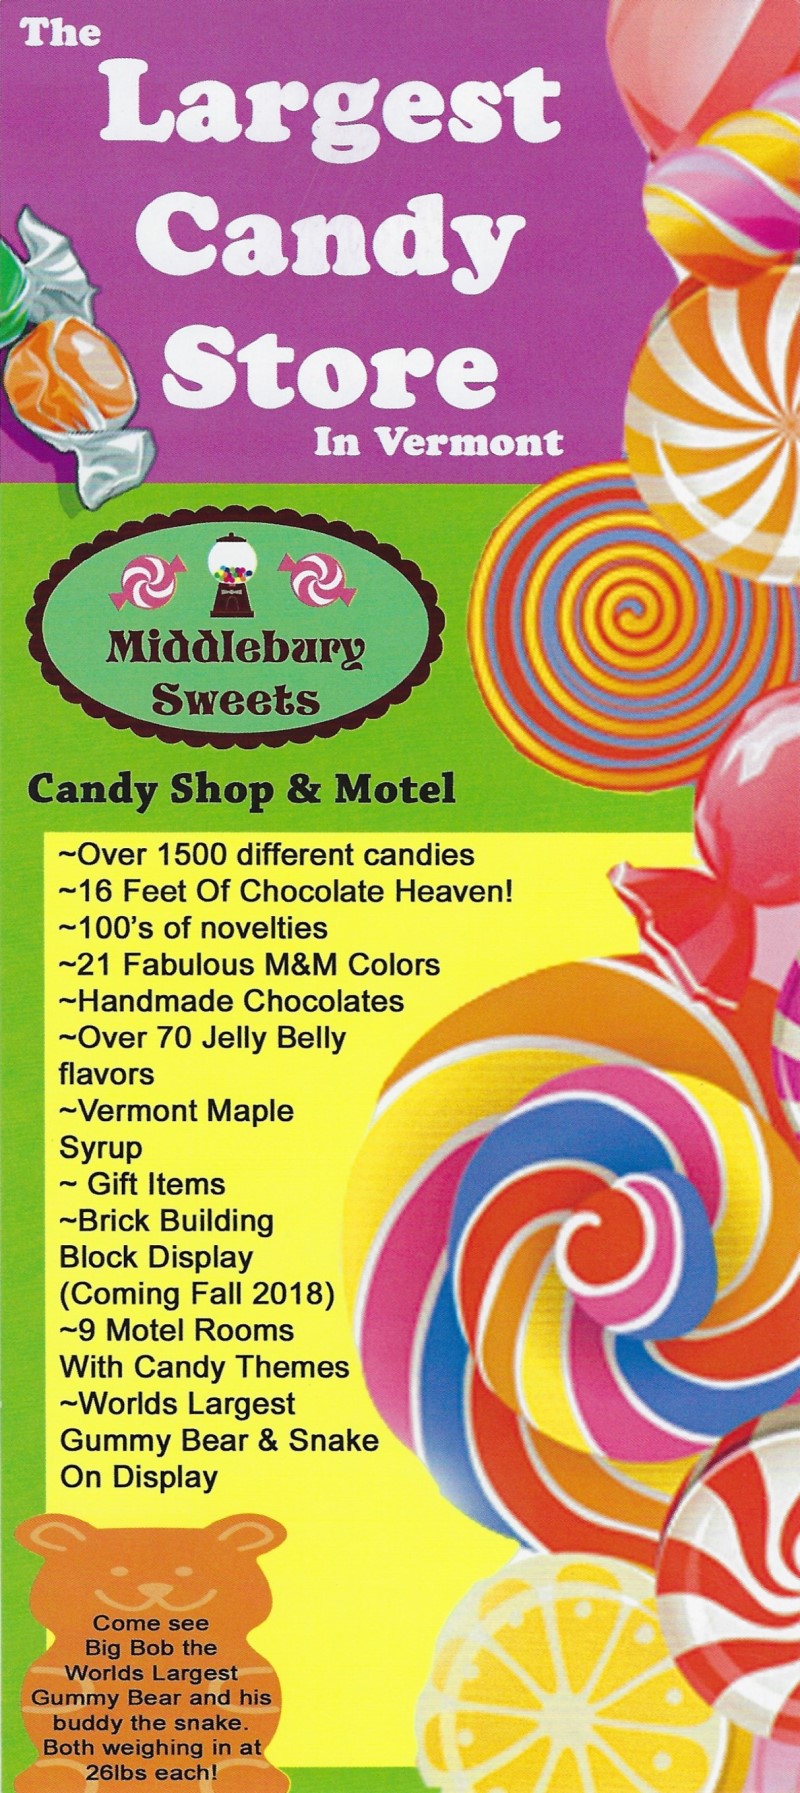 Middlebury Sweets brochure thumbnail